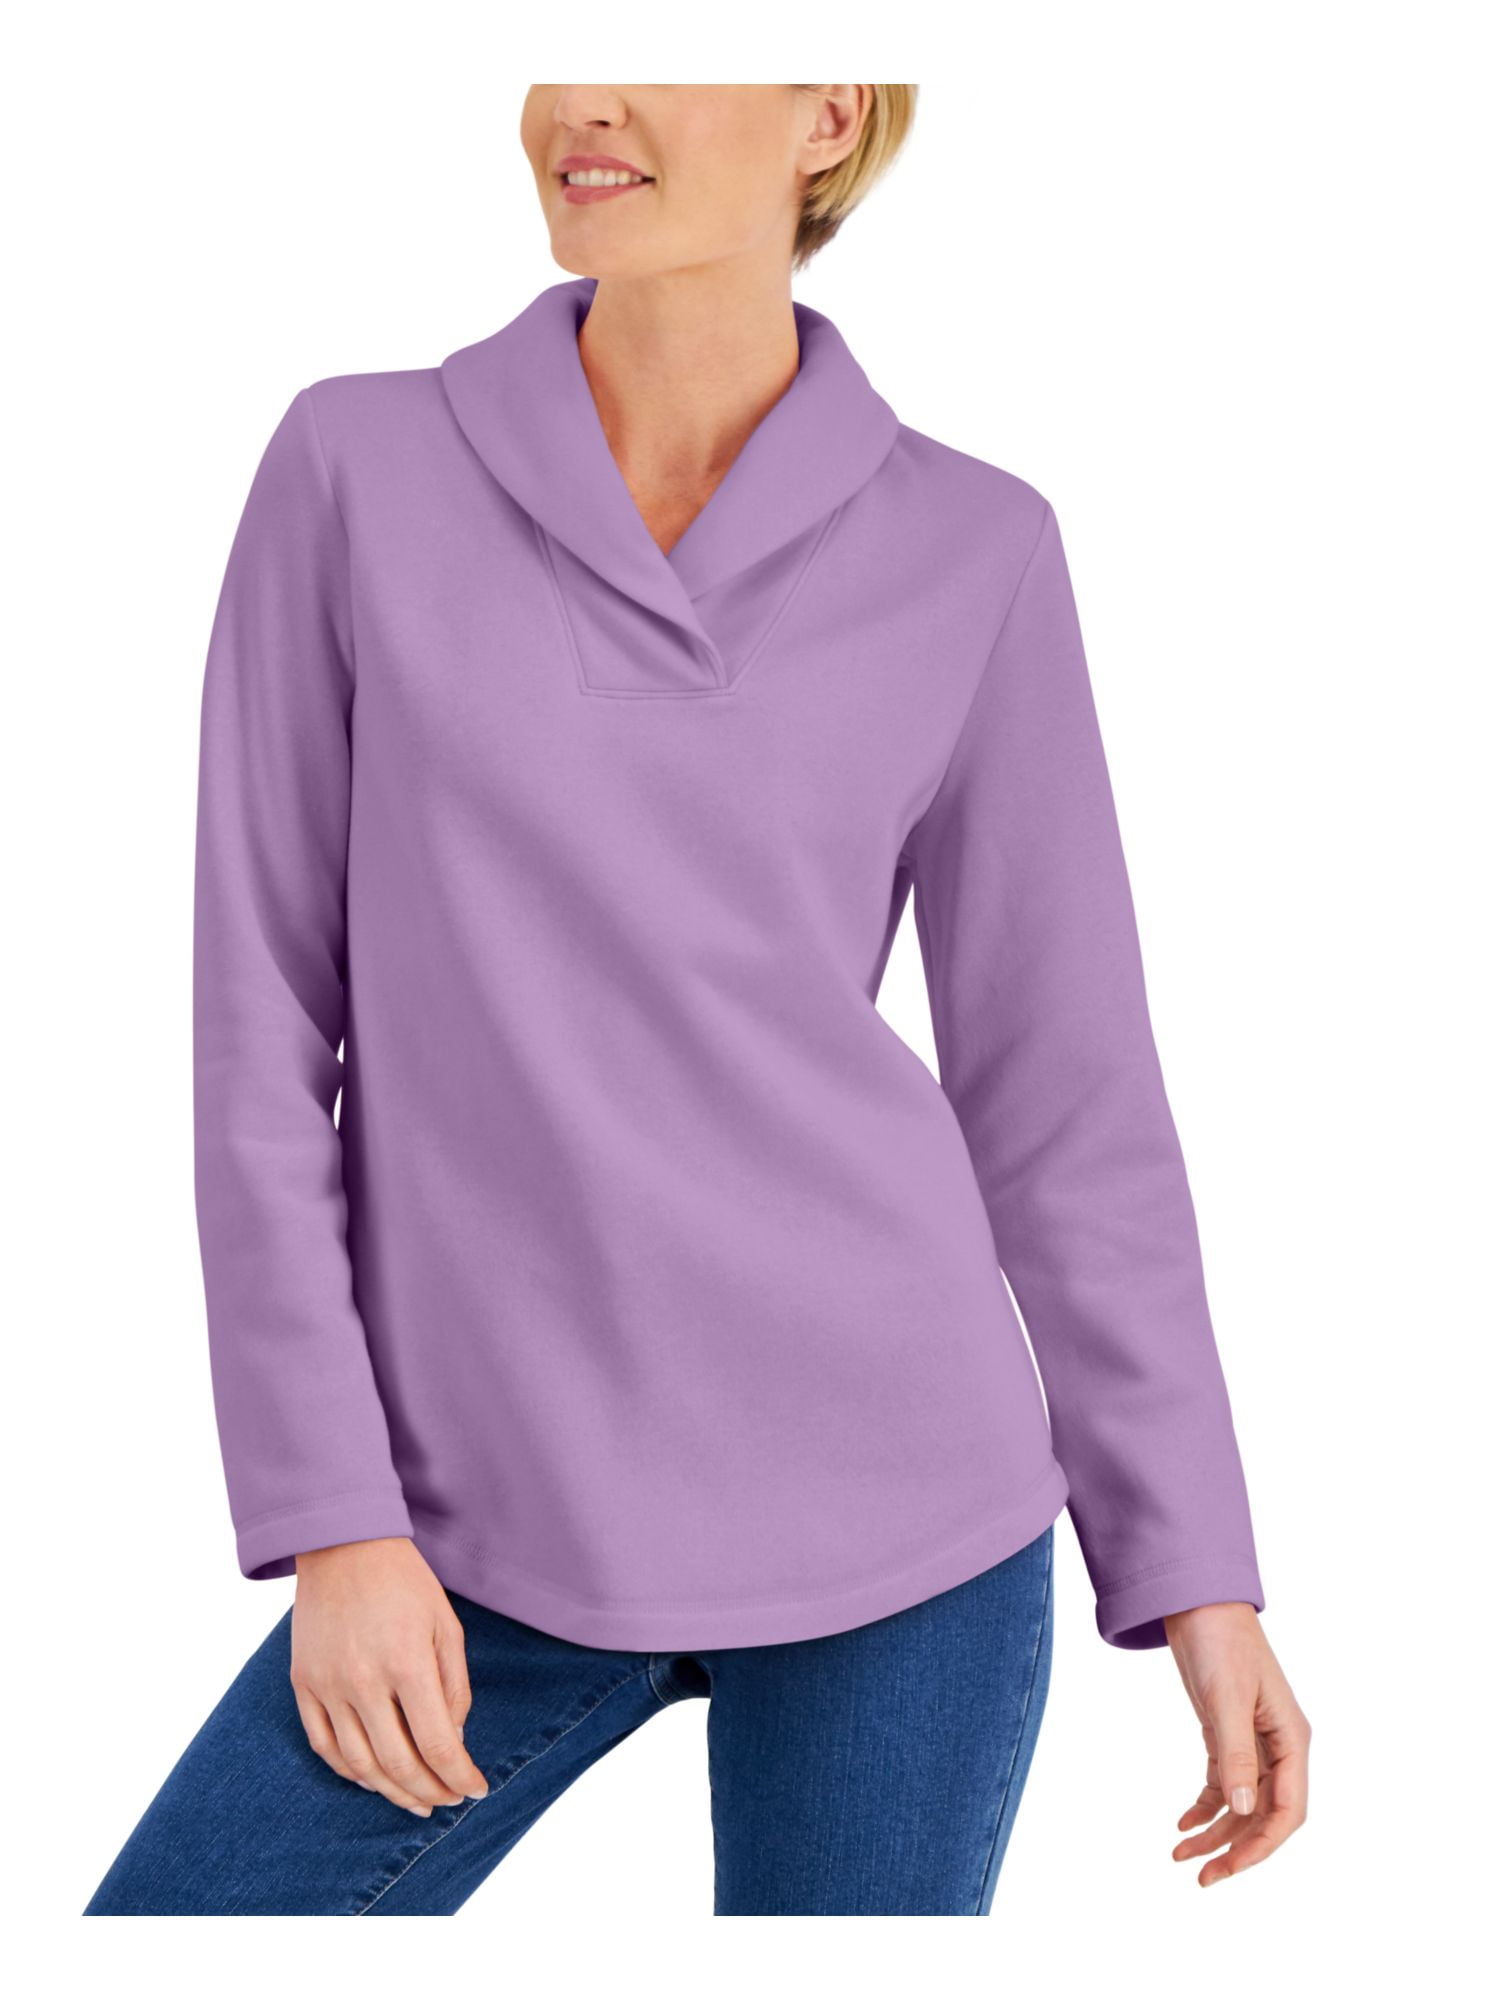 Karen Scott 100% Cotton Pink Long Sleeve Turtleneck Size L - 62